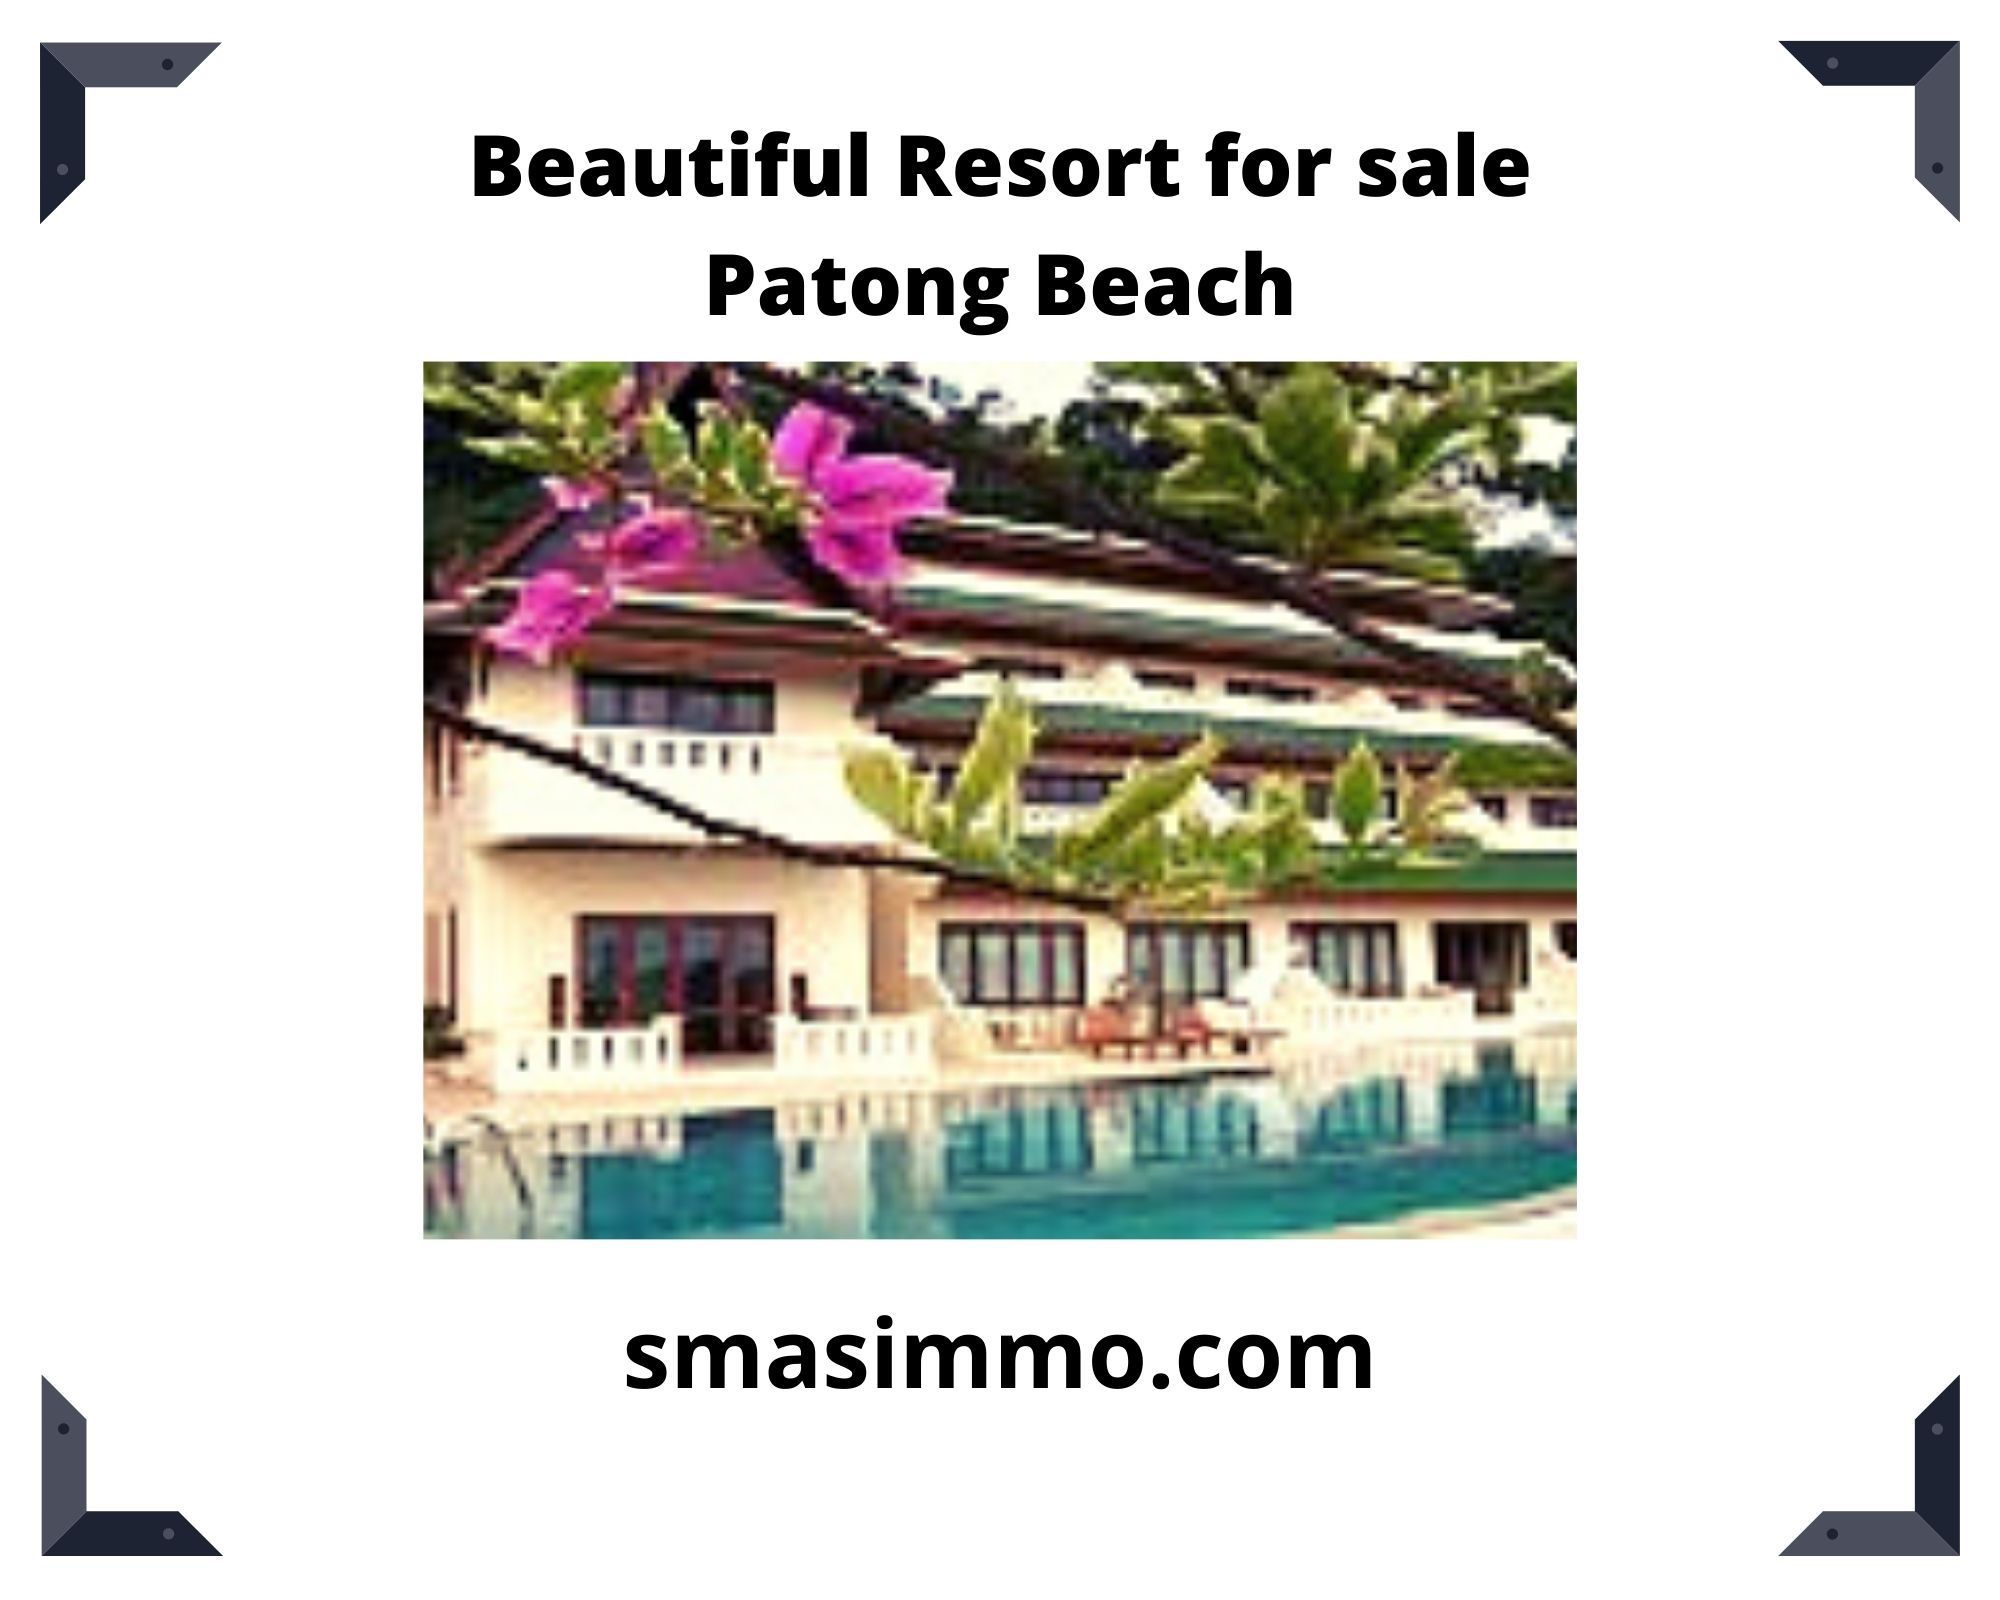 Beautiful Resort for sale Patong Beach (2).jpg  by smasimmo